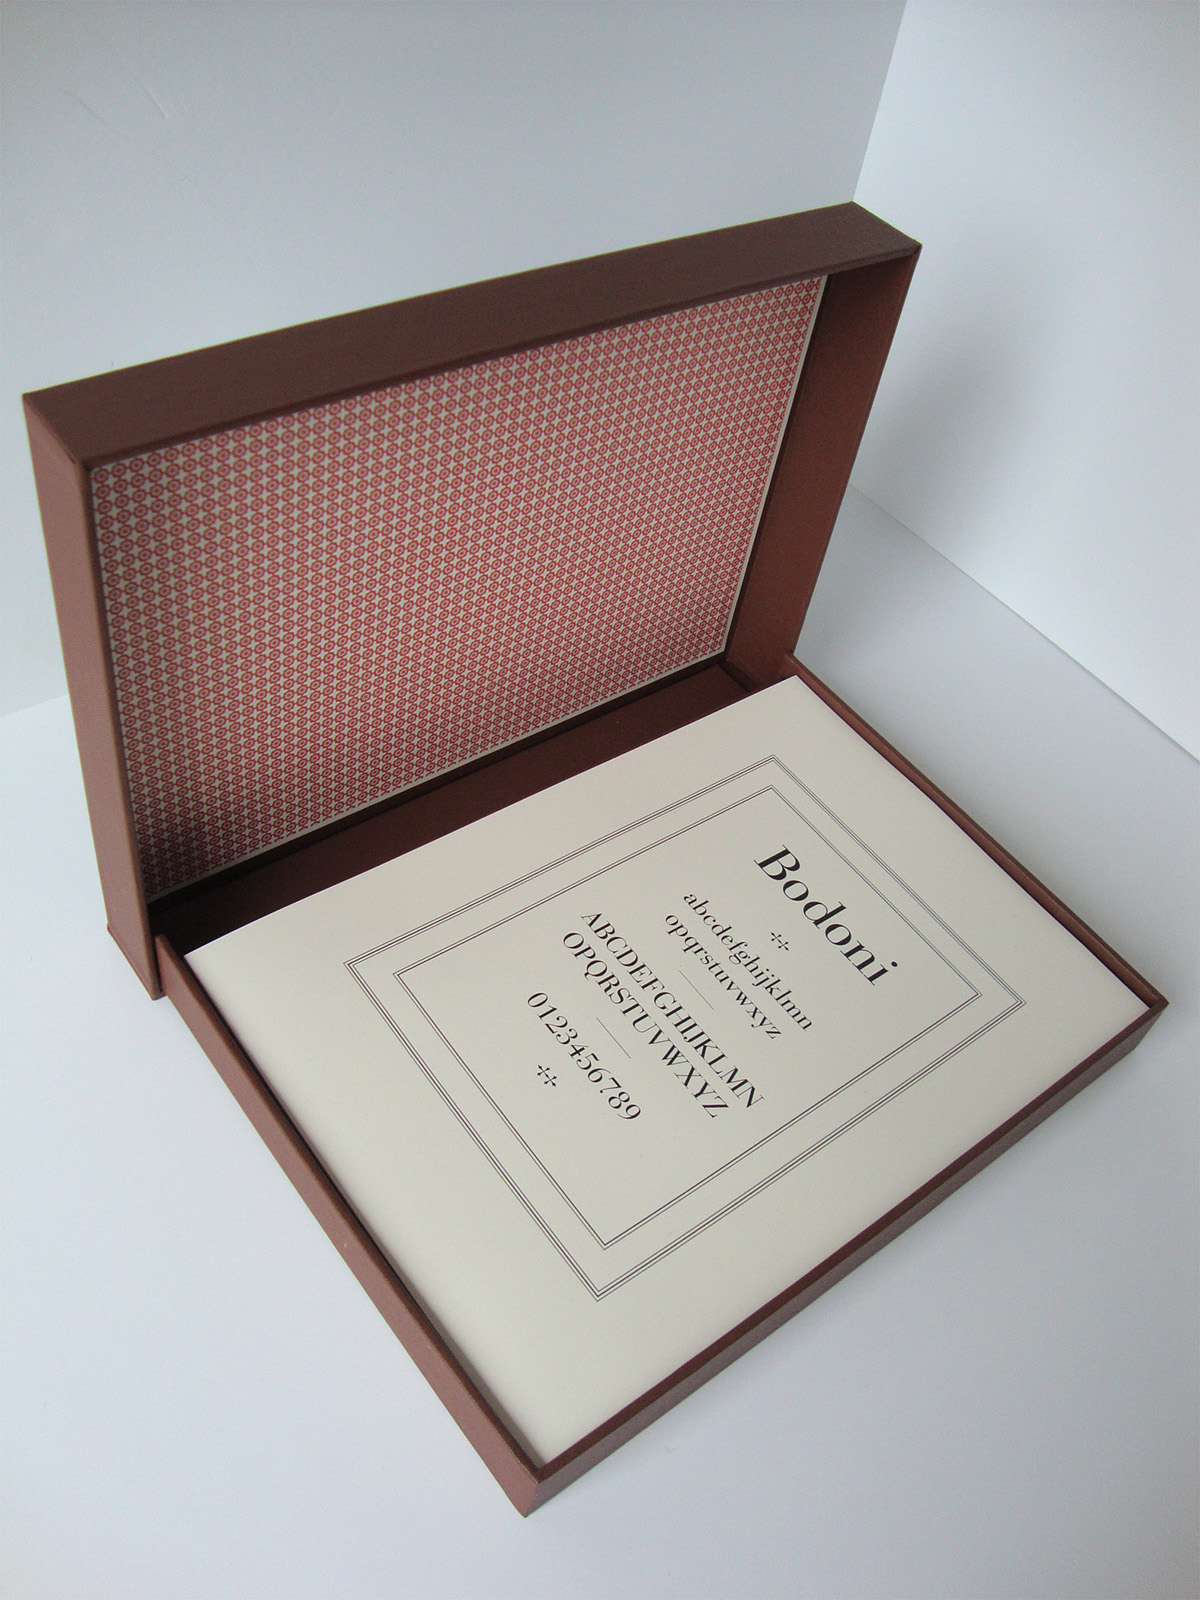 modern type design typographic prints book French stitched bespoke box